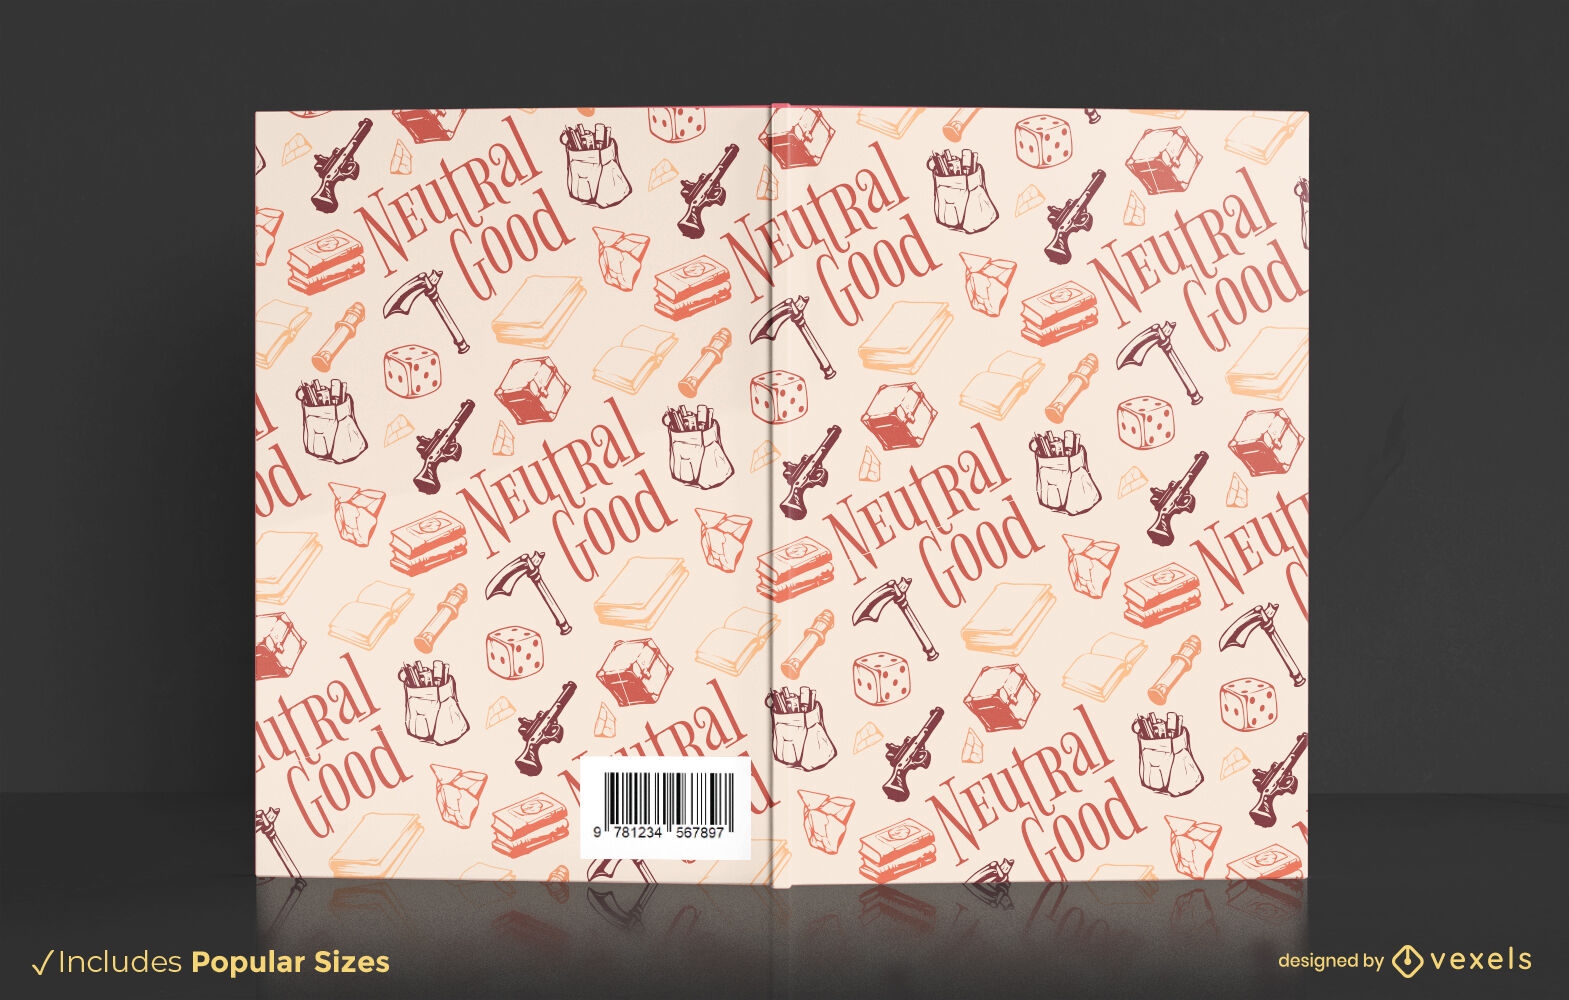 Neutral good book cover design